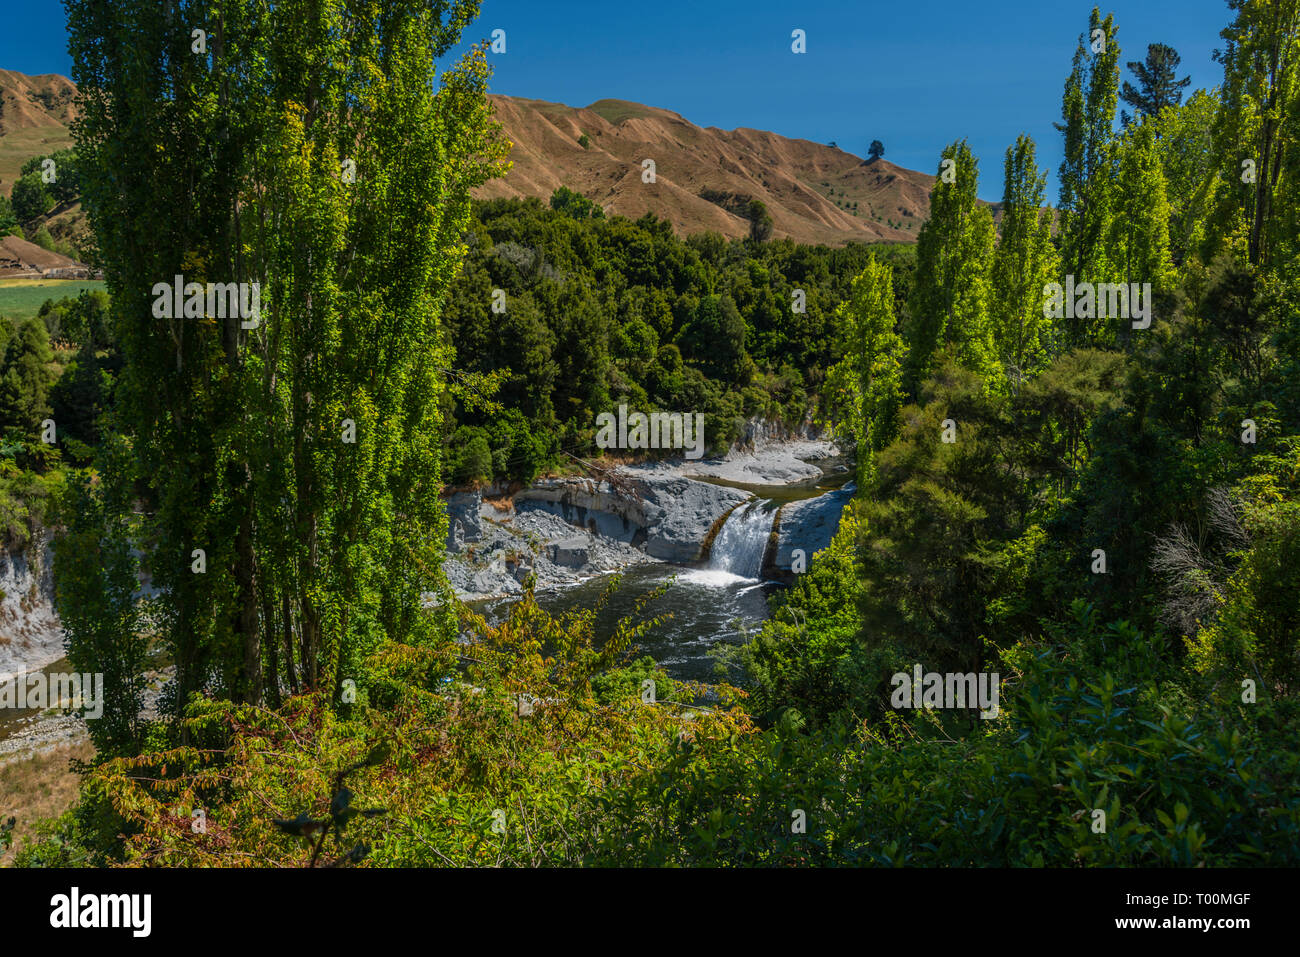 Ruakawa Falls, surrounded by lush foliage, in New Zealand's North Island. Stock Photo